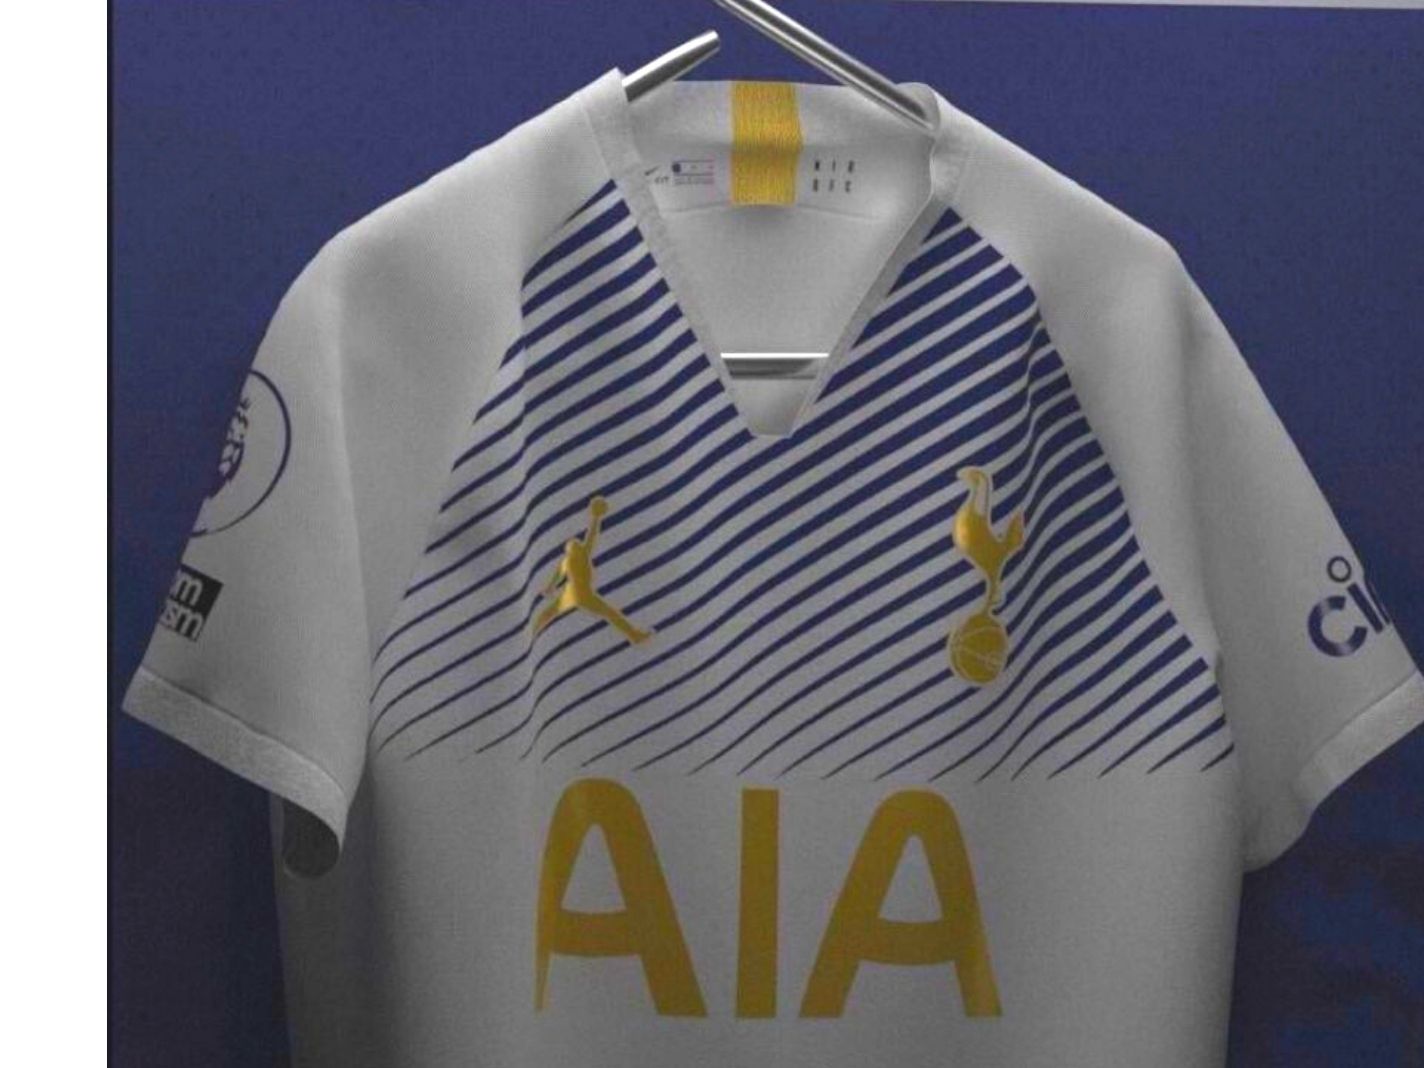 Tottenham concept kit with Air Jordan branding backfires big time on Twitter